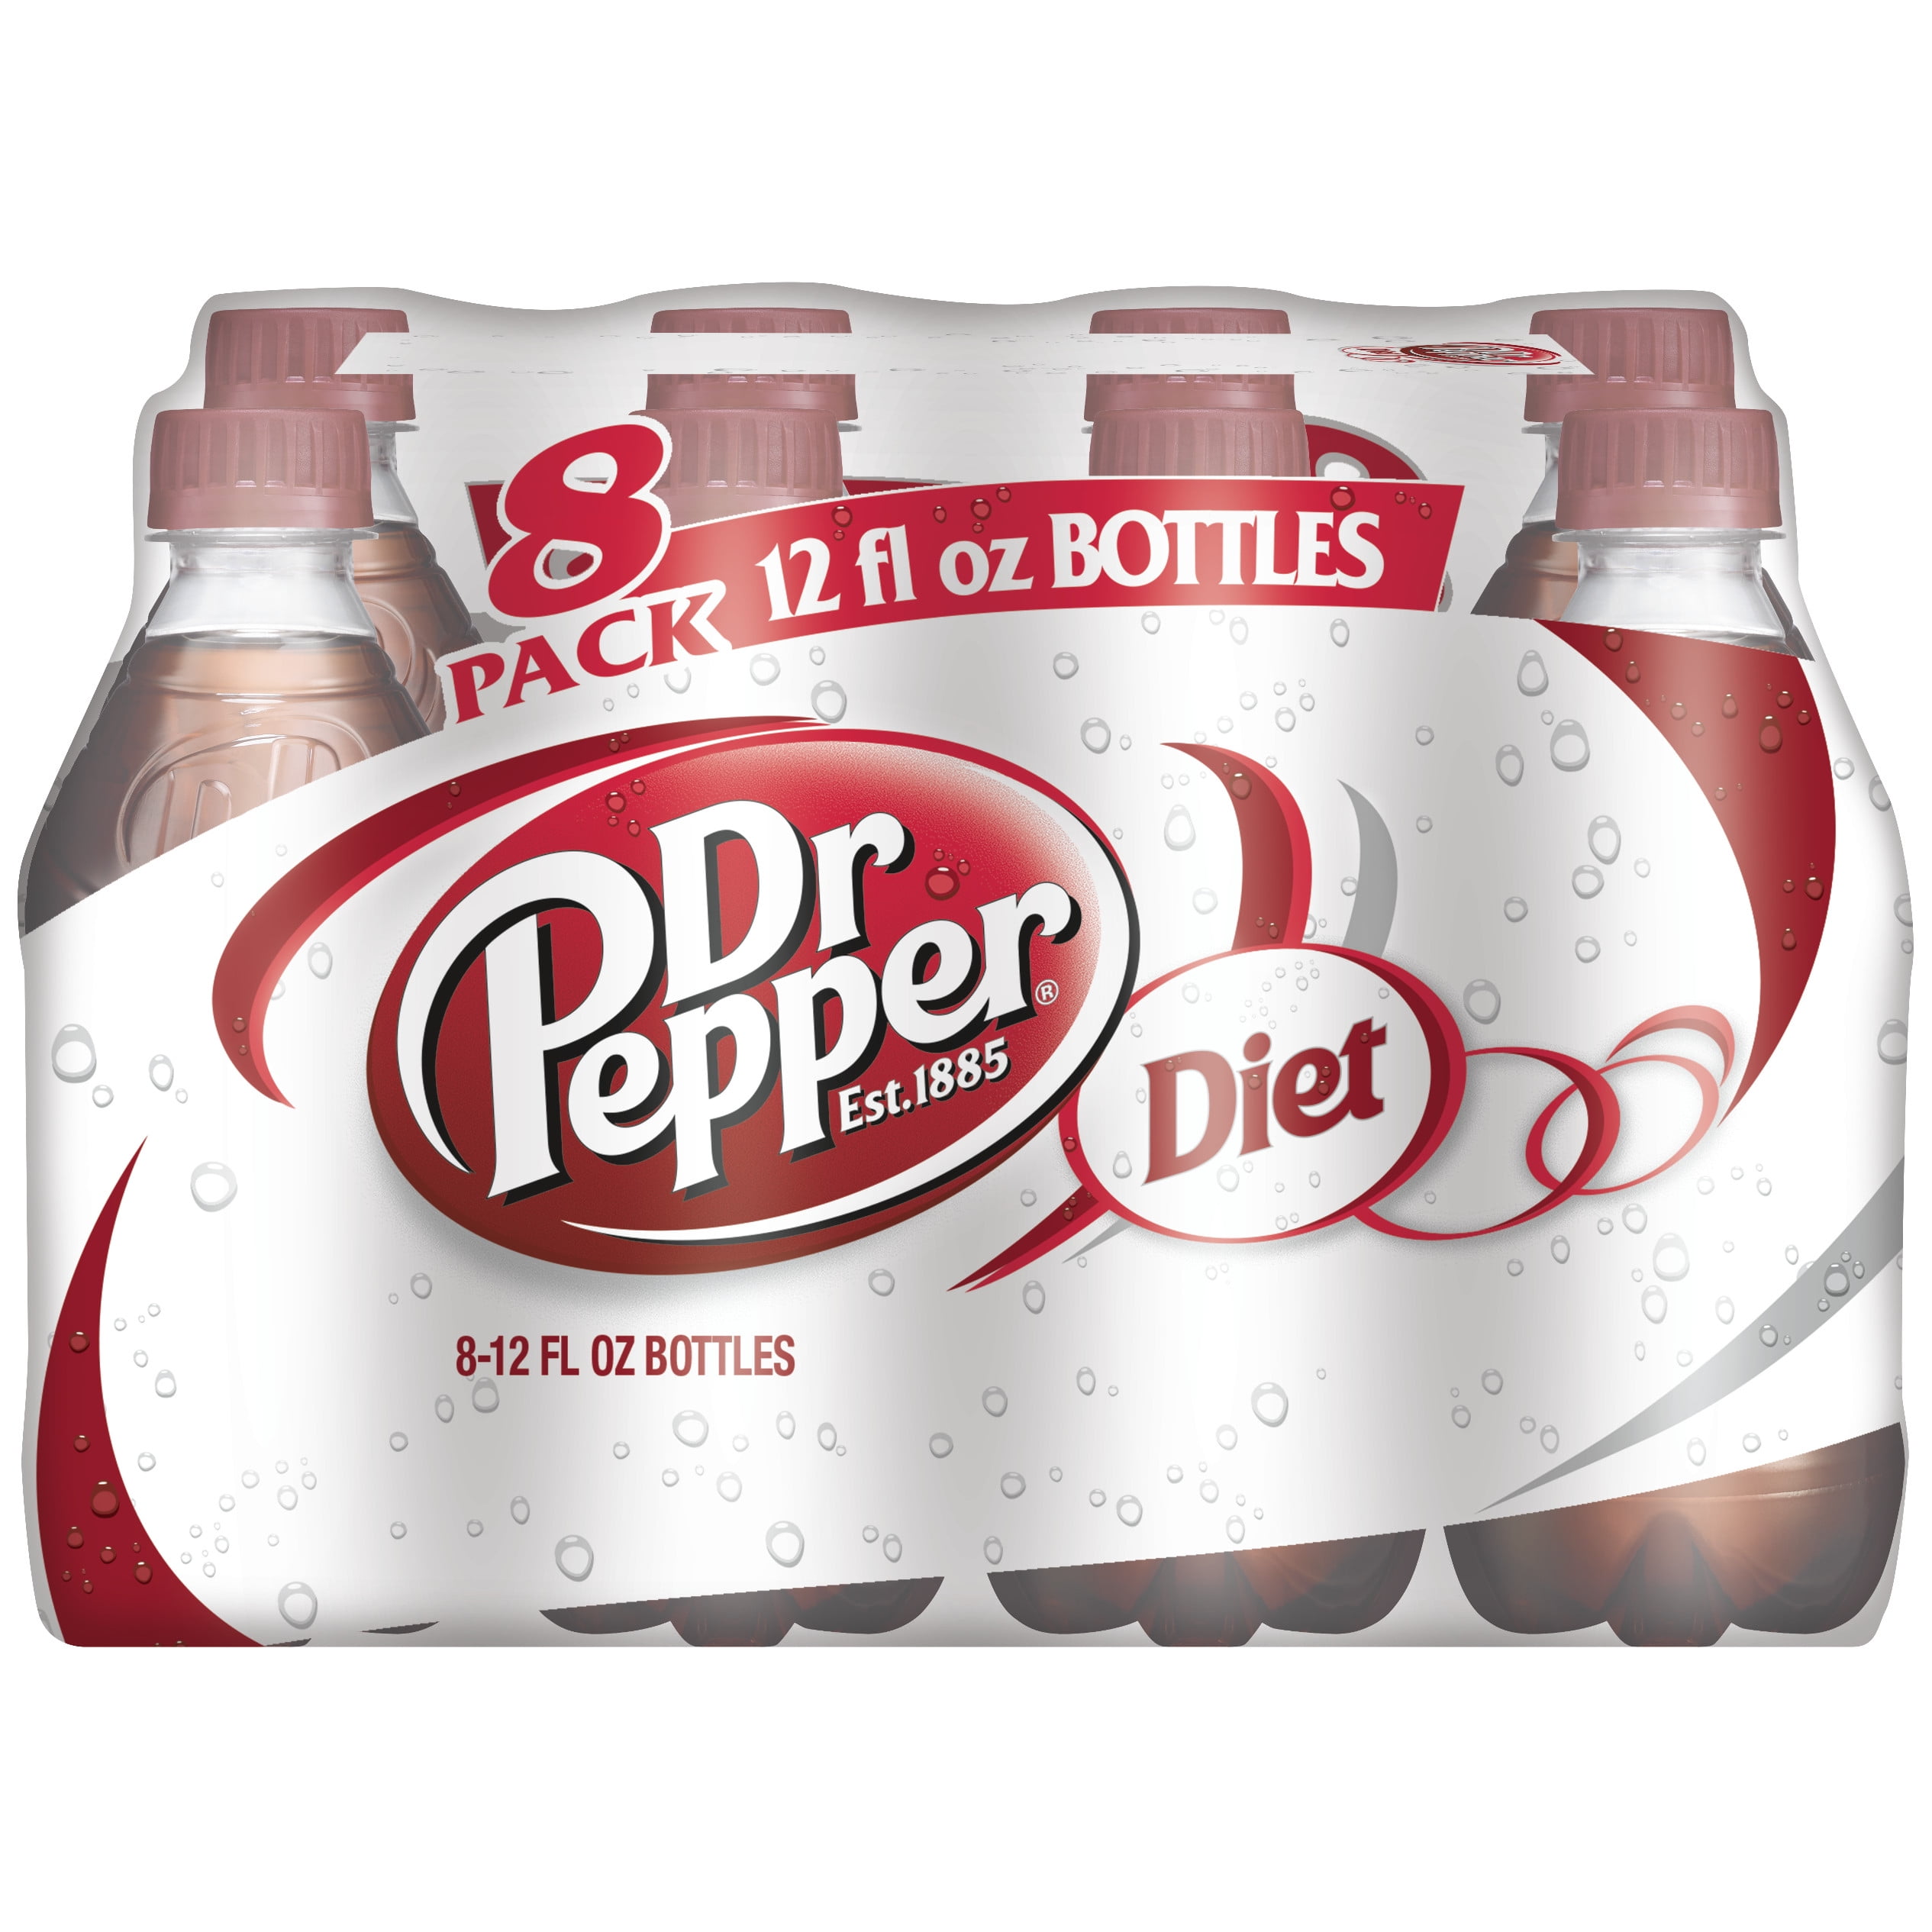 Pepper состав. Доктор Пеппер. Доктор Пеппер Пятерочка. Доктор Пеппер в бутылке. Доктор Пеппер диет.